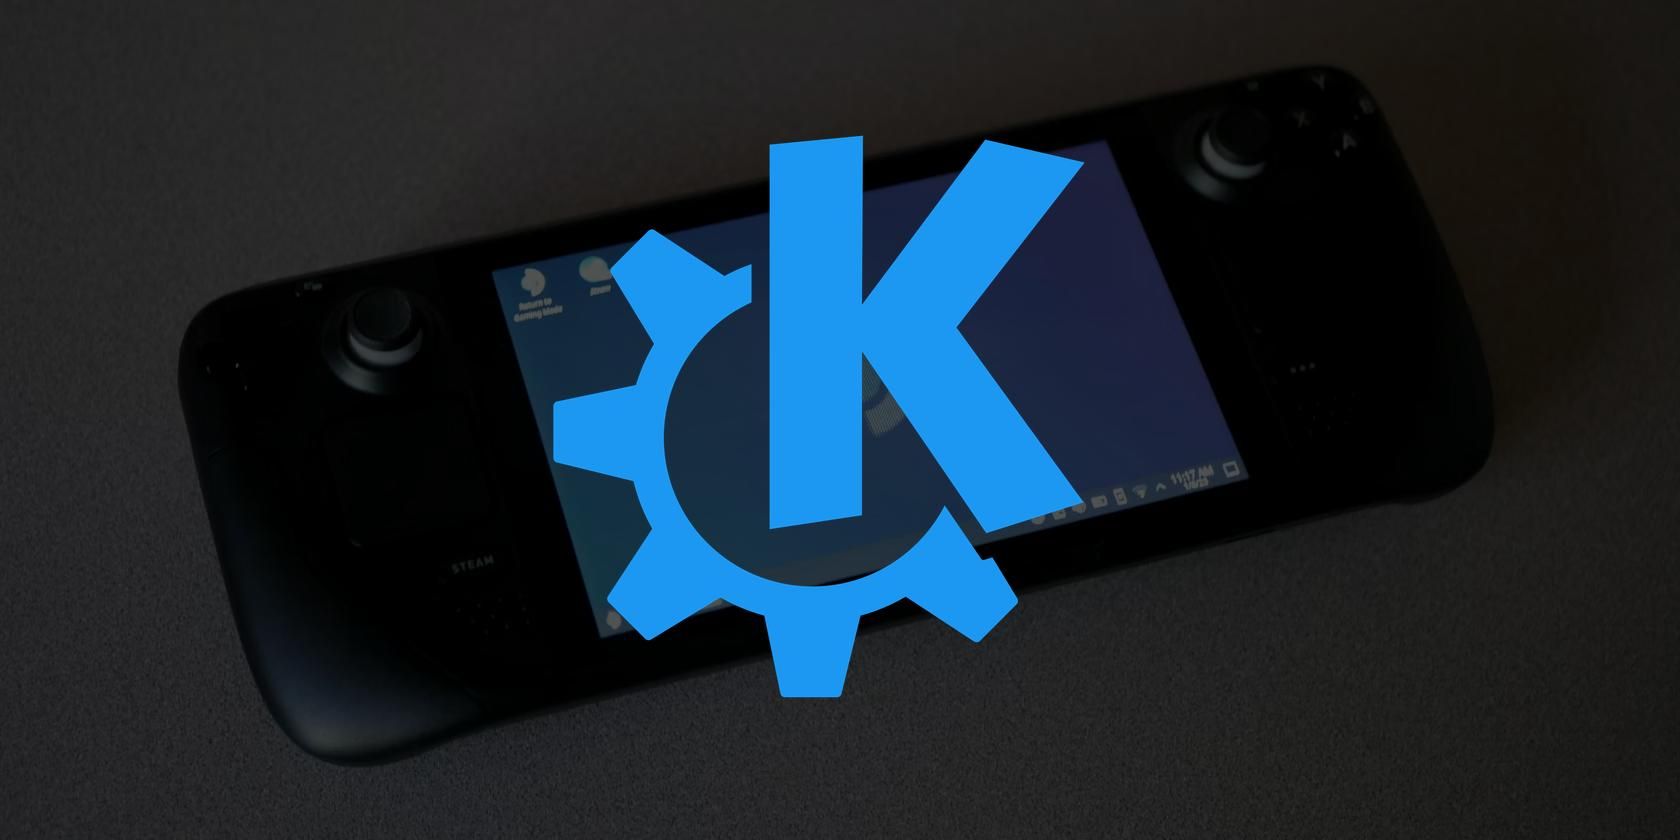 KDE logo on top of a Steam Deck